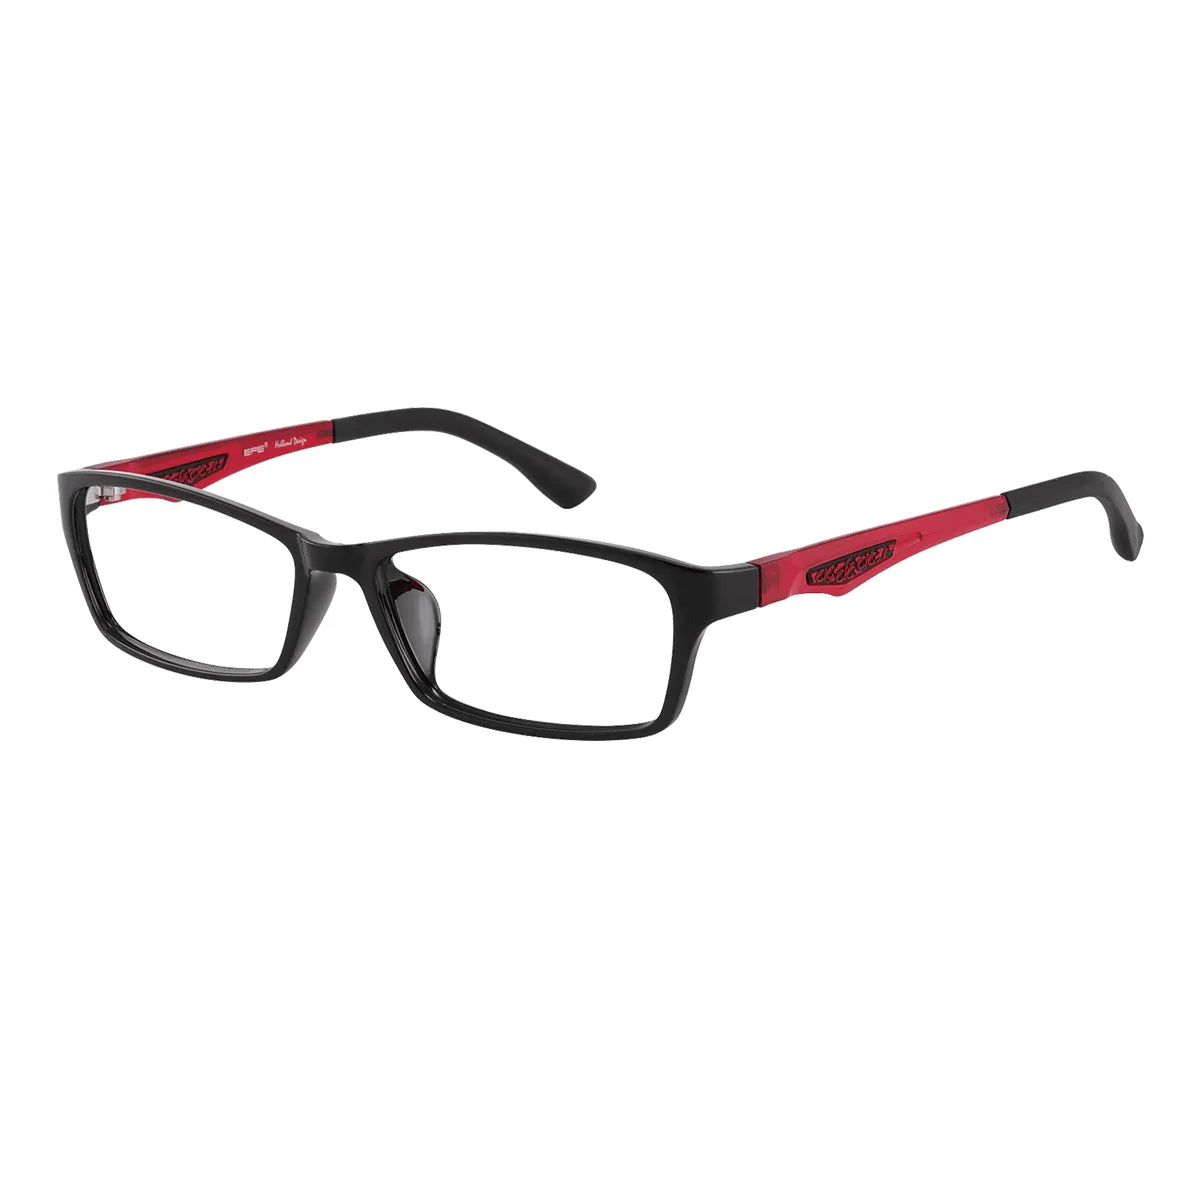 Jerry - Rectangle Black Glasses for Men - EFE